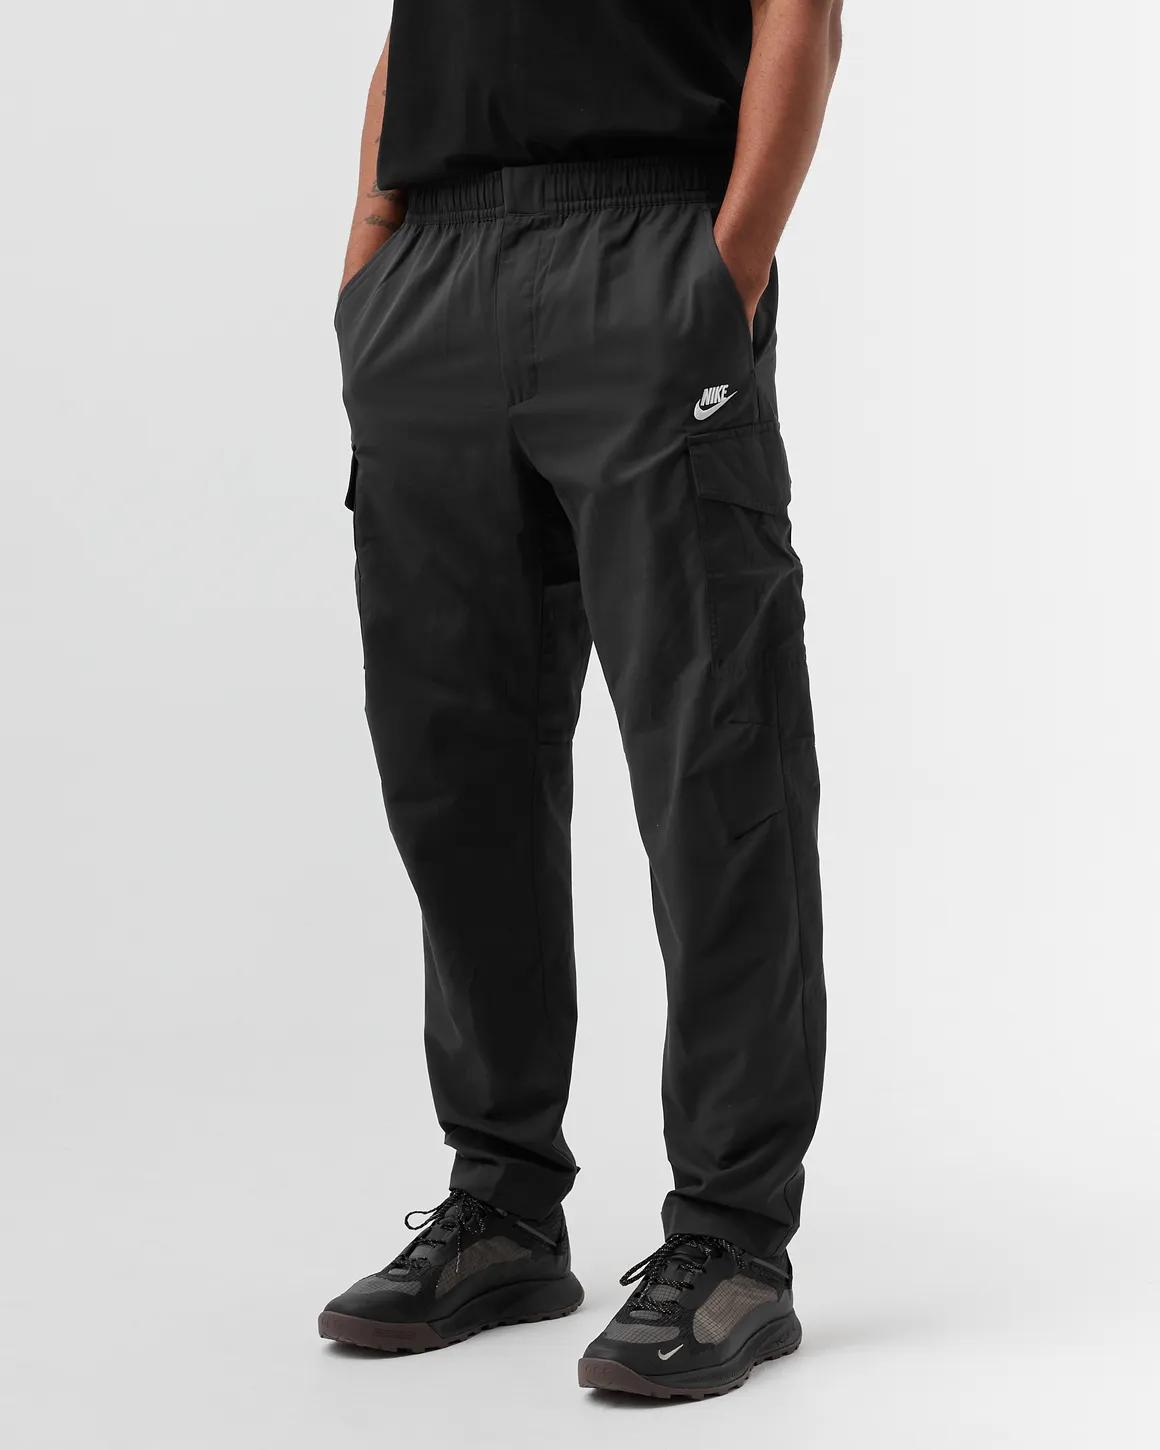 Nike Twill Cargo Pant in Black